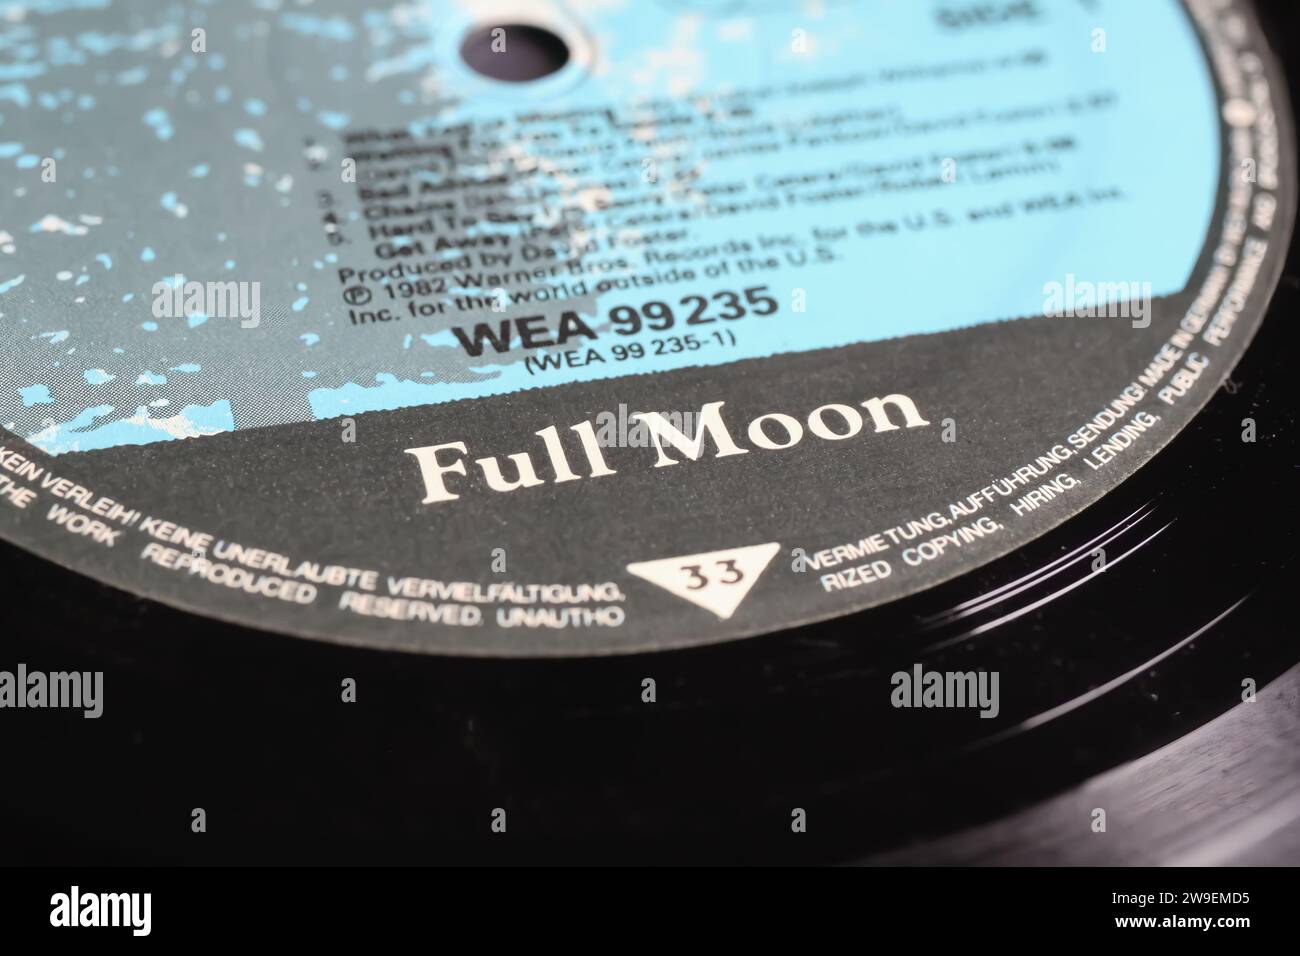 Viersen, Germany - May 9. 2023: Closeup of vinyl album label of Full Moon records company Stock Photo